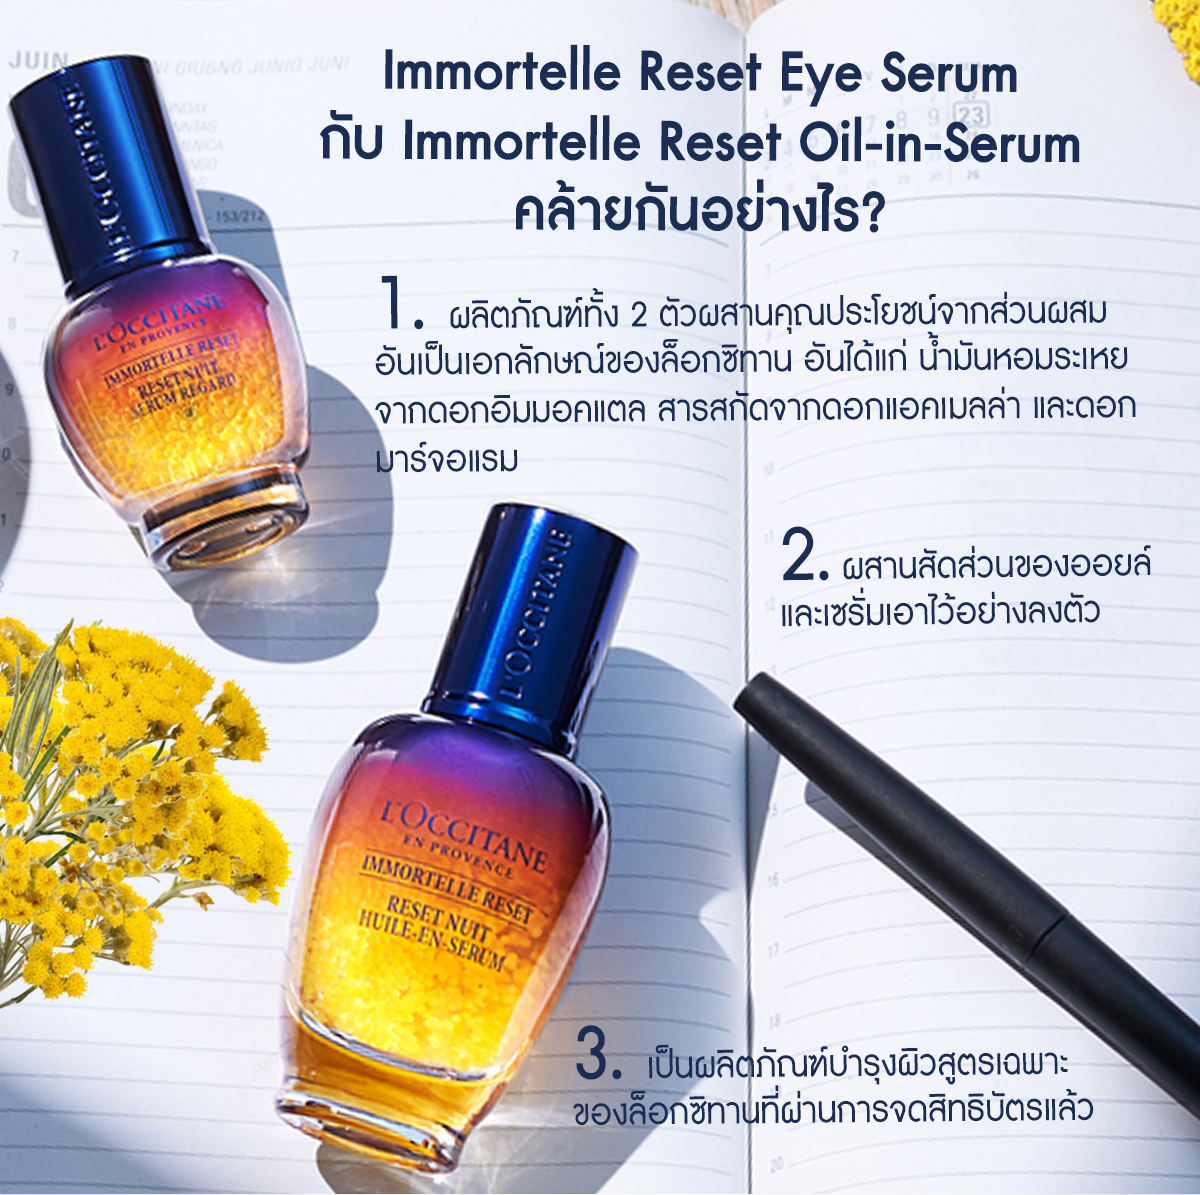 L'Occitane Immortelle Reset Eye Serum 15 ml ล็อกซิทาน  เซรั่มบำรุงผิวรอบดวงตา อิมมอคแตล รีเซ็ต 15 มล. (อายเซรั่ม, อิมมอกแตล,  ใต้ตาหมองคล้ำ) | Lazada.co.th